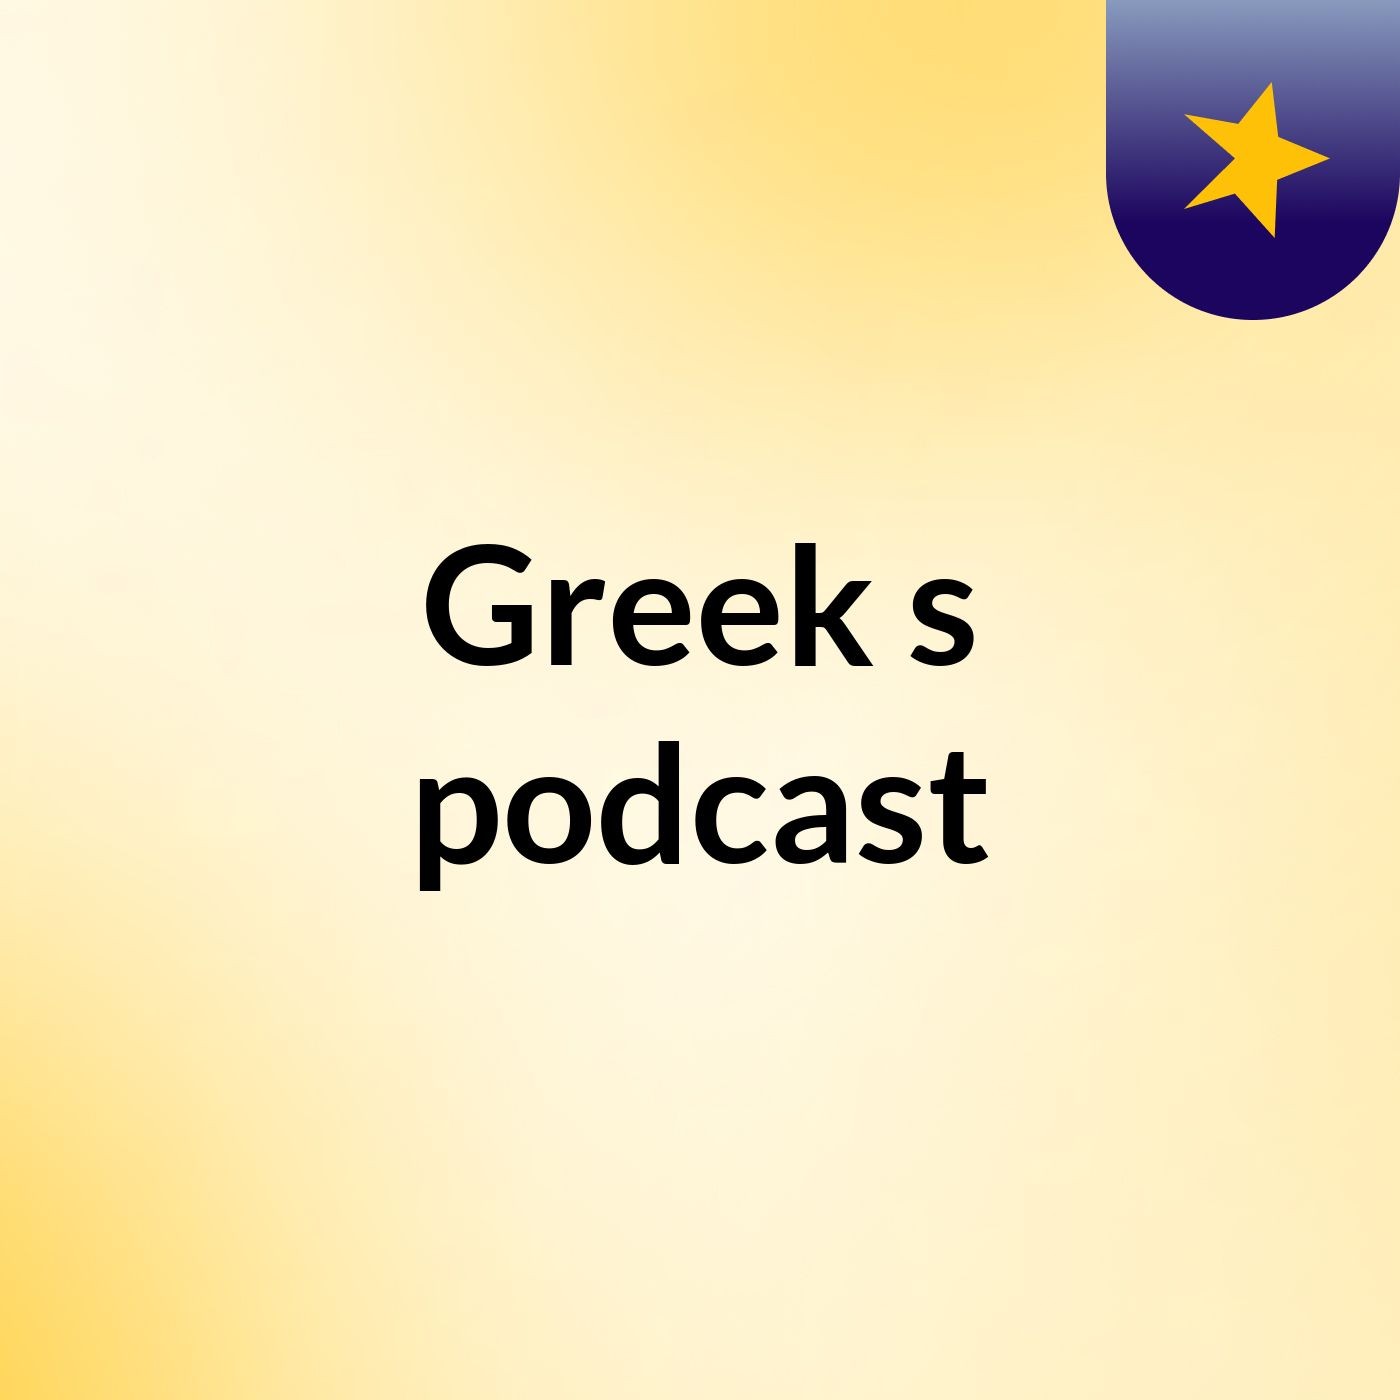 Greek's podcast